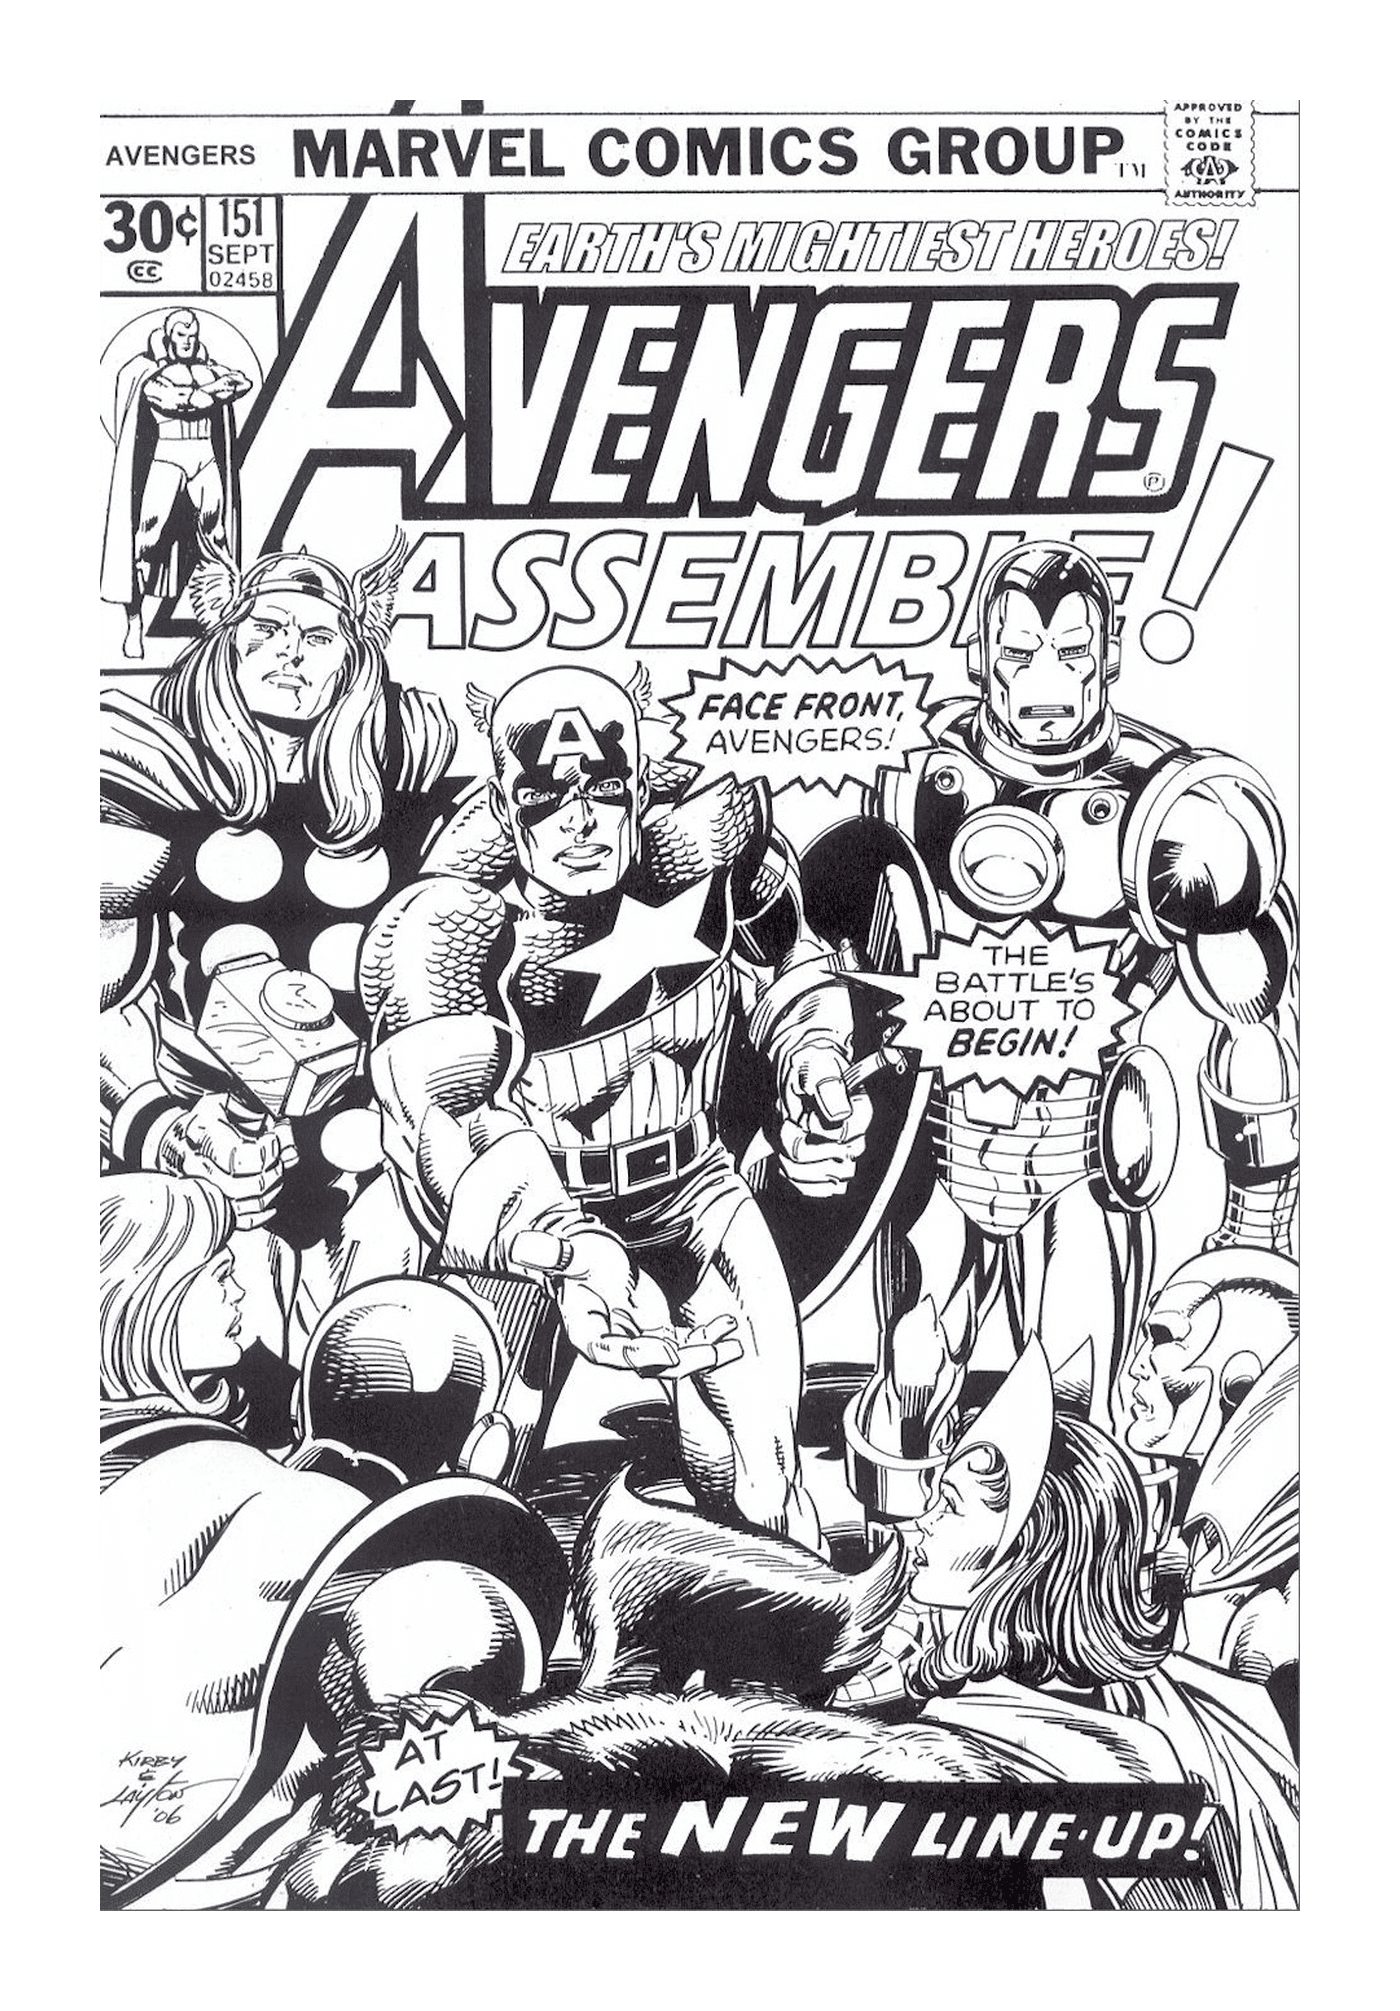  Una portada de Marvel cómics con un grupo de superhéroes 